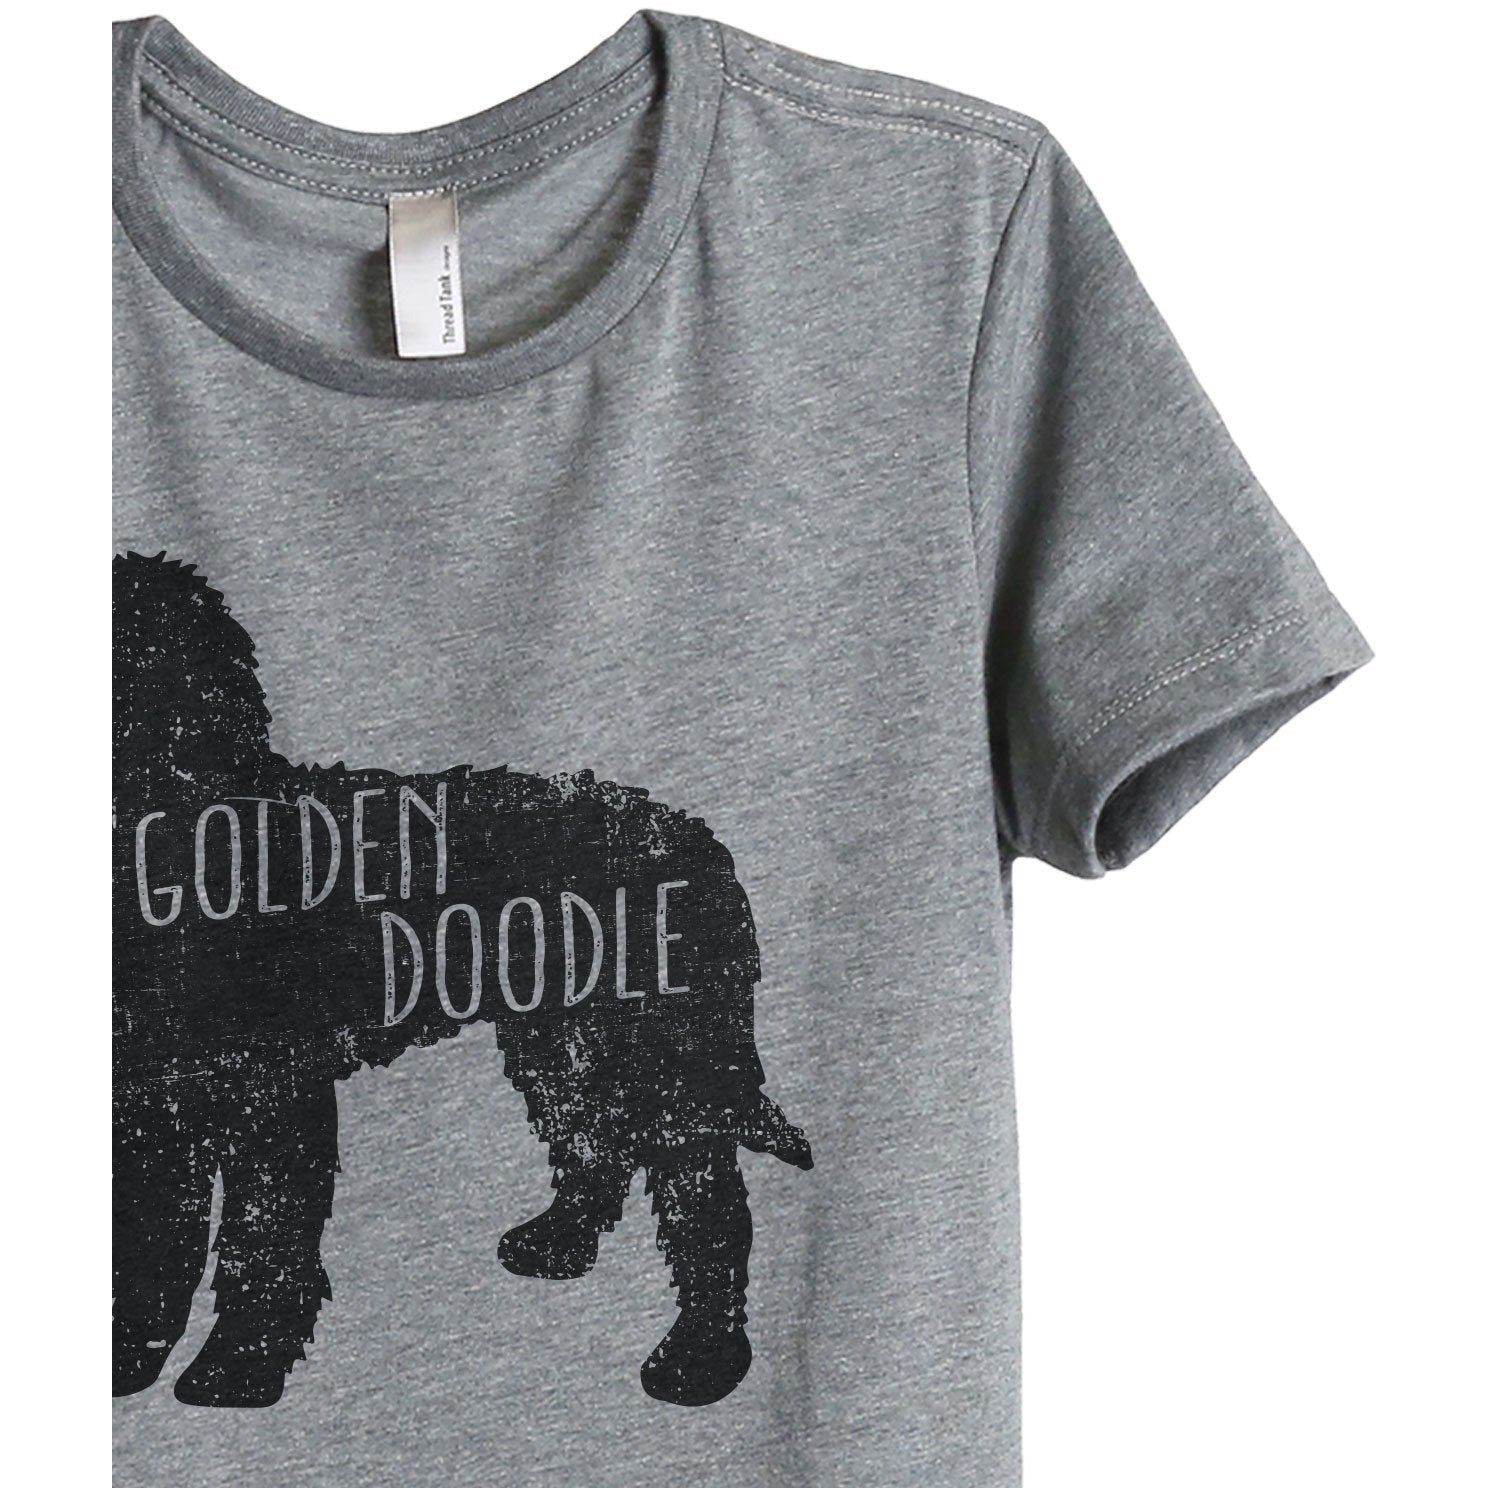 Golden Doodle Silhouette Women's Relaxed Crewneck T-Shirt Top Tee Heather Grey Zoom Details
